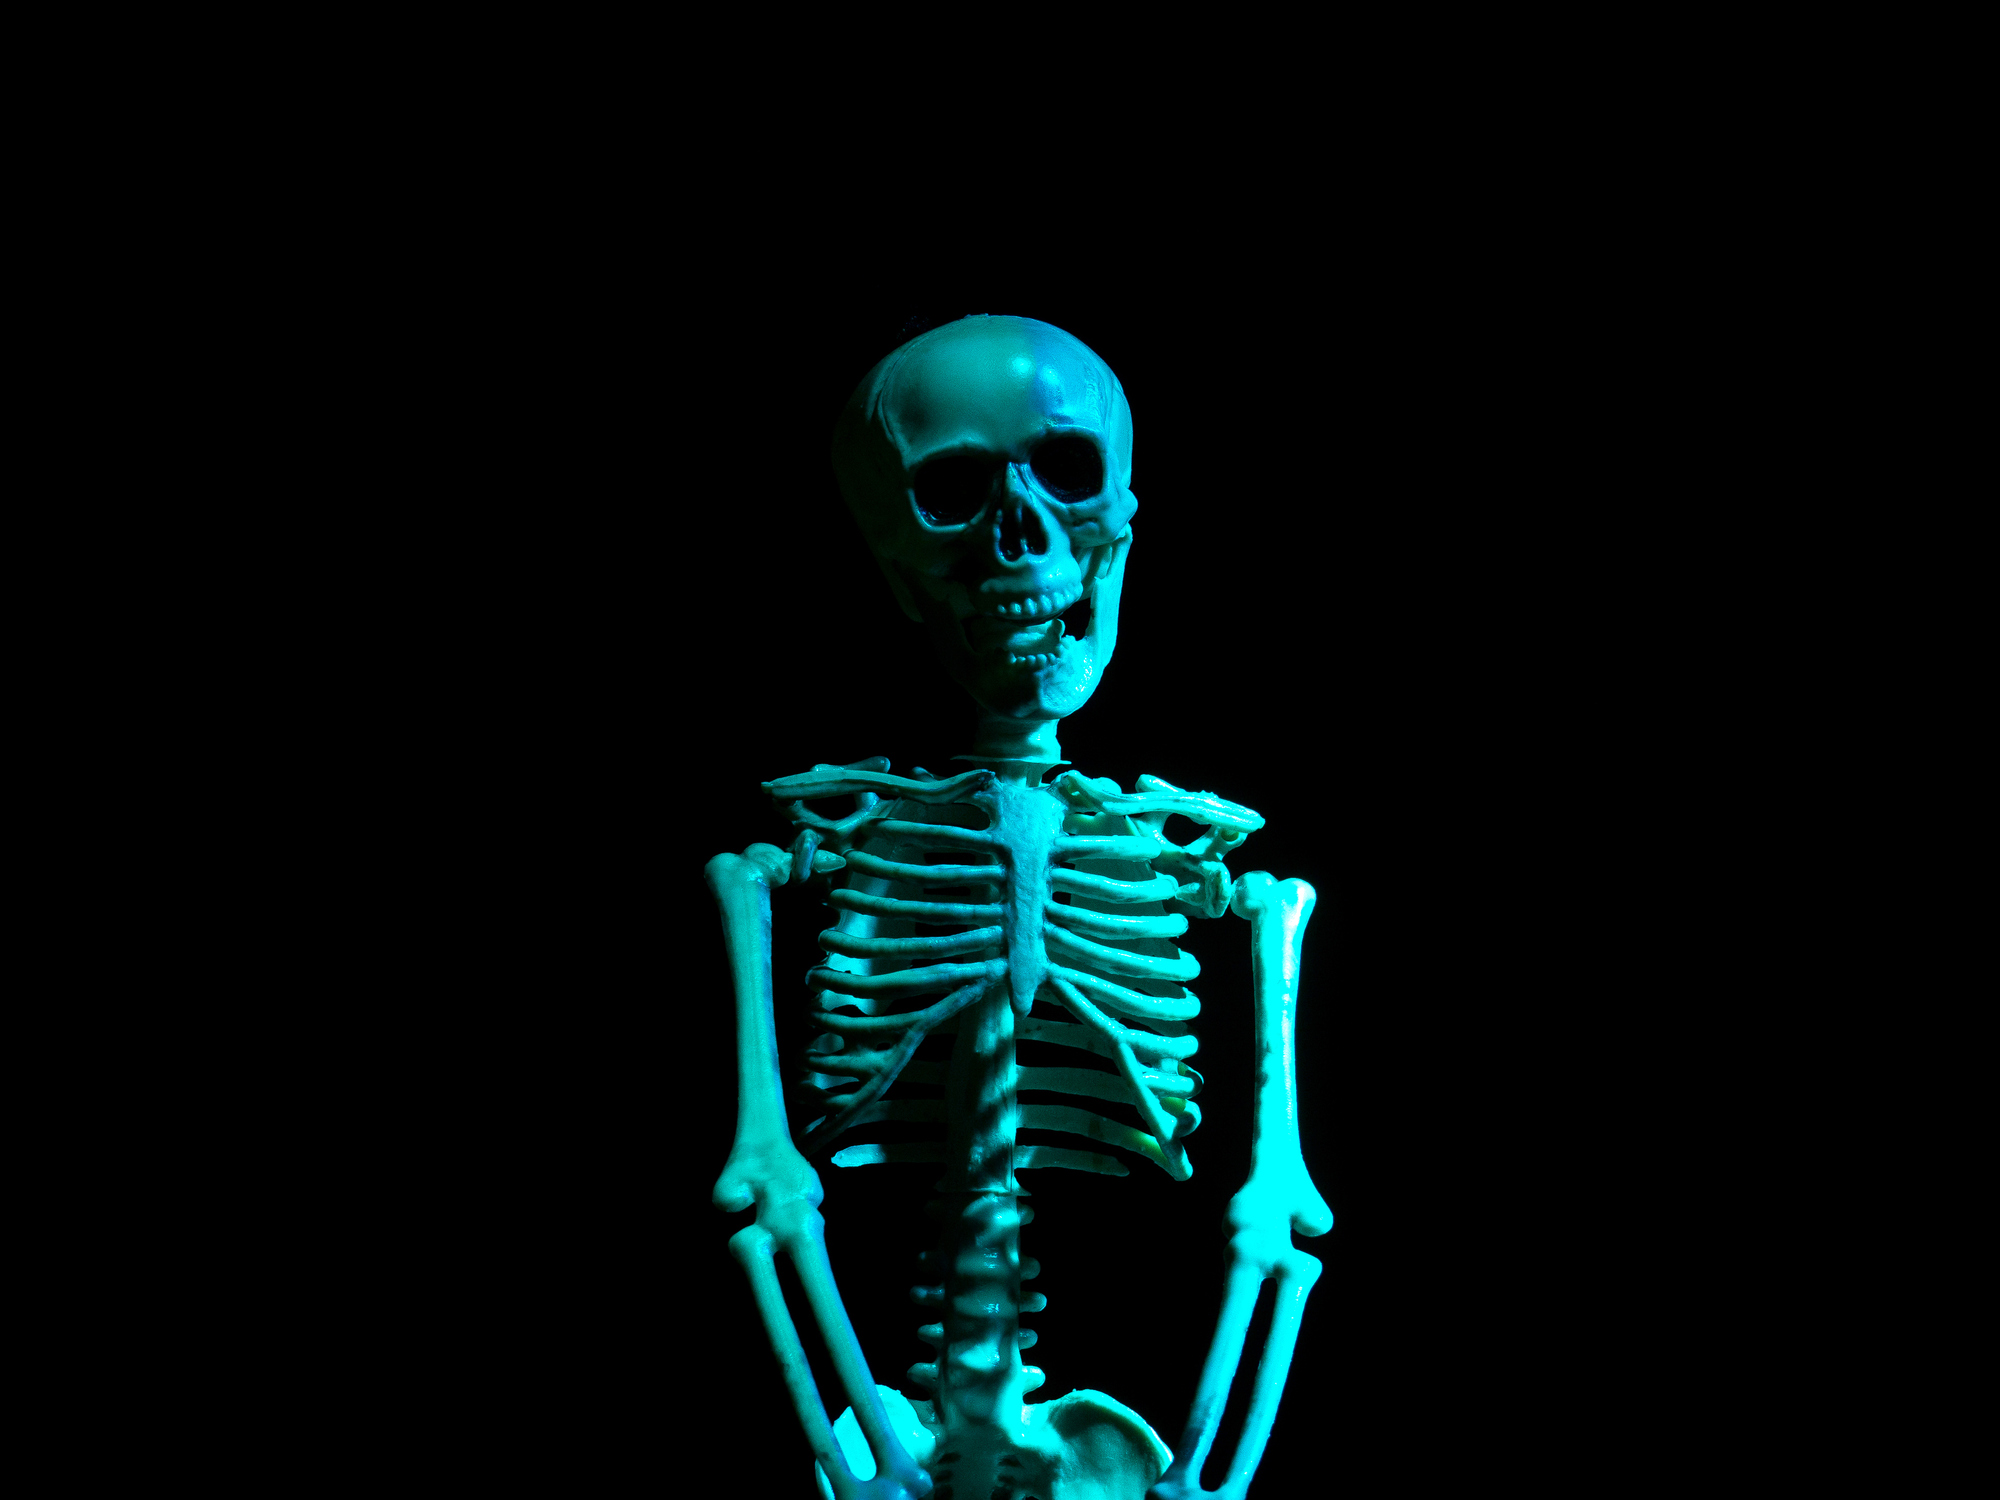 Skeleton with black background. Halloween Creative image.